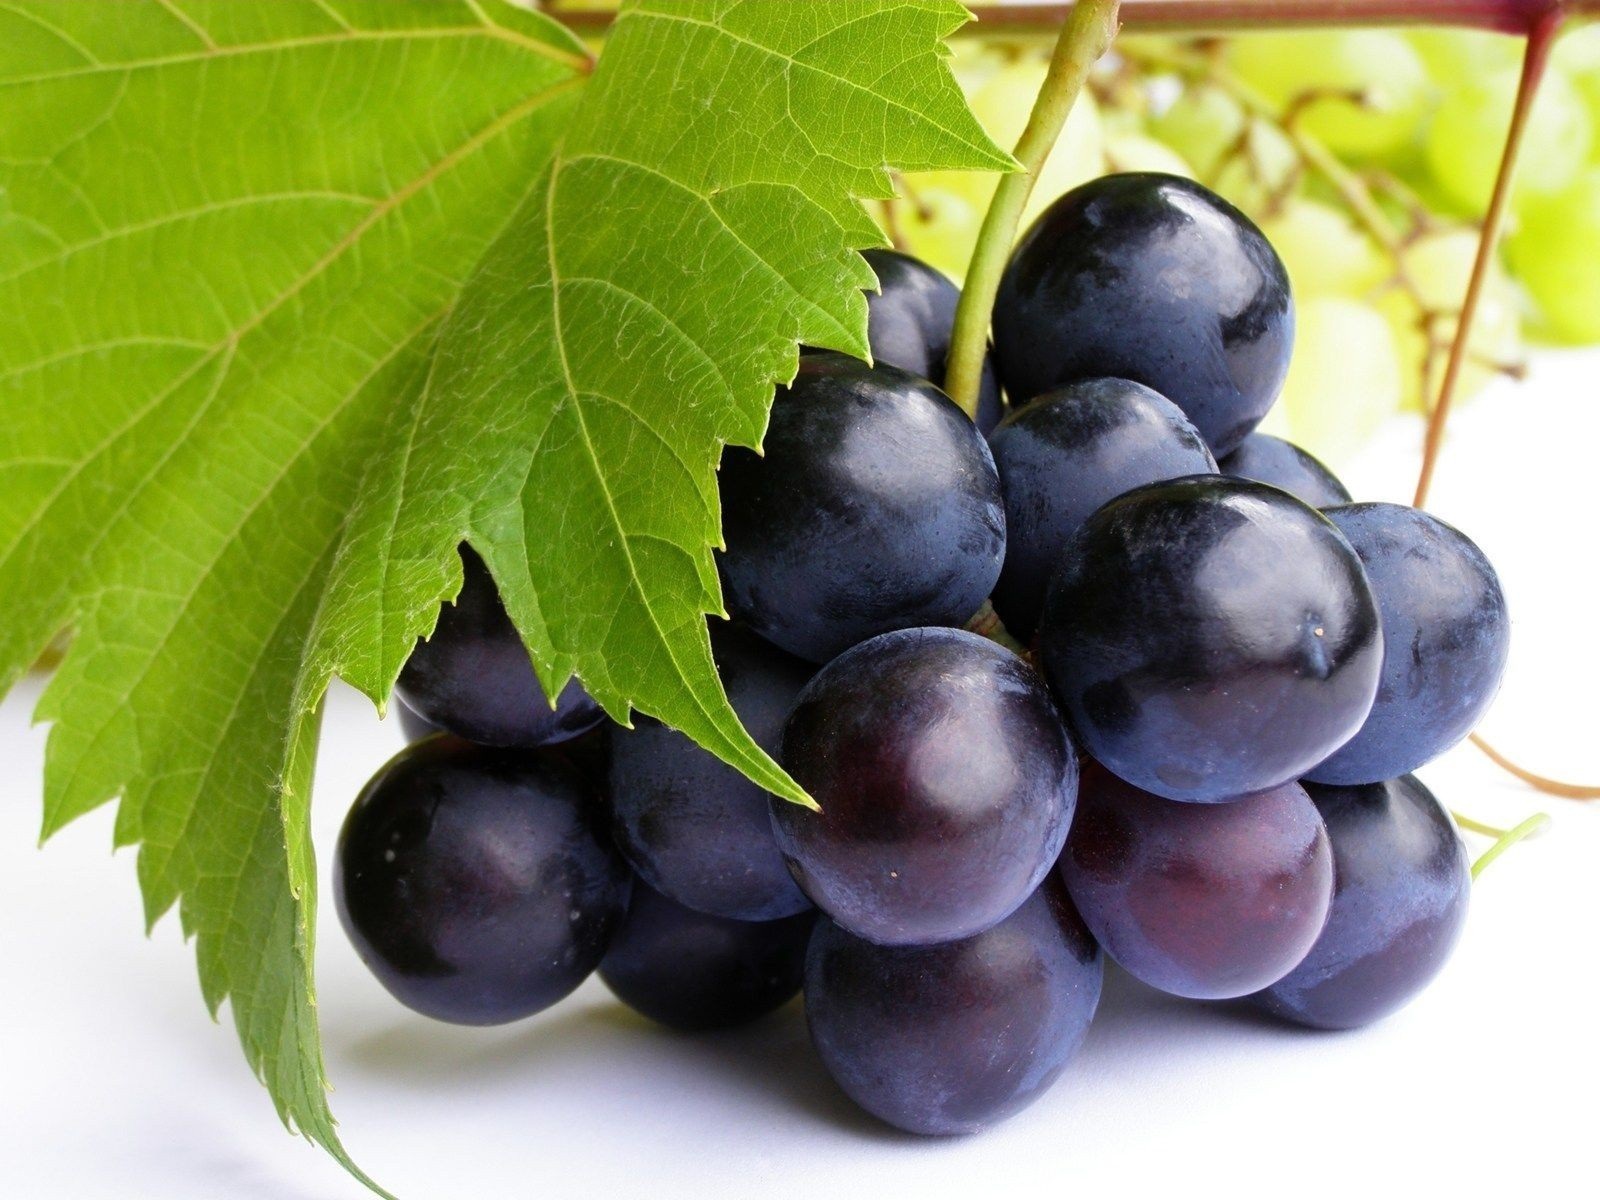 grapes image download